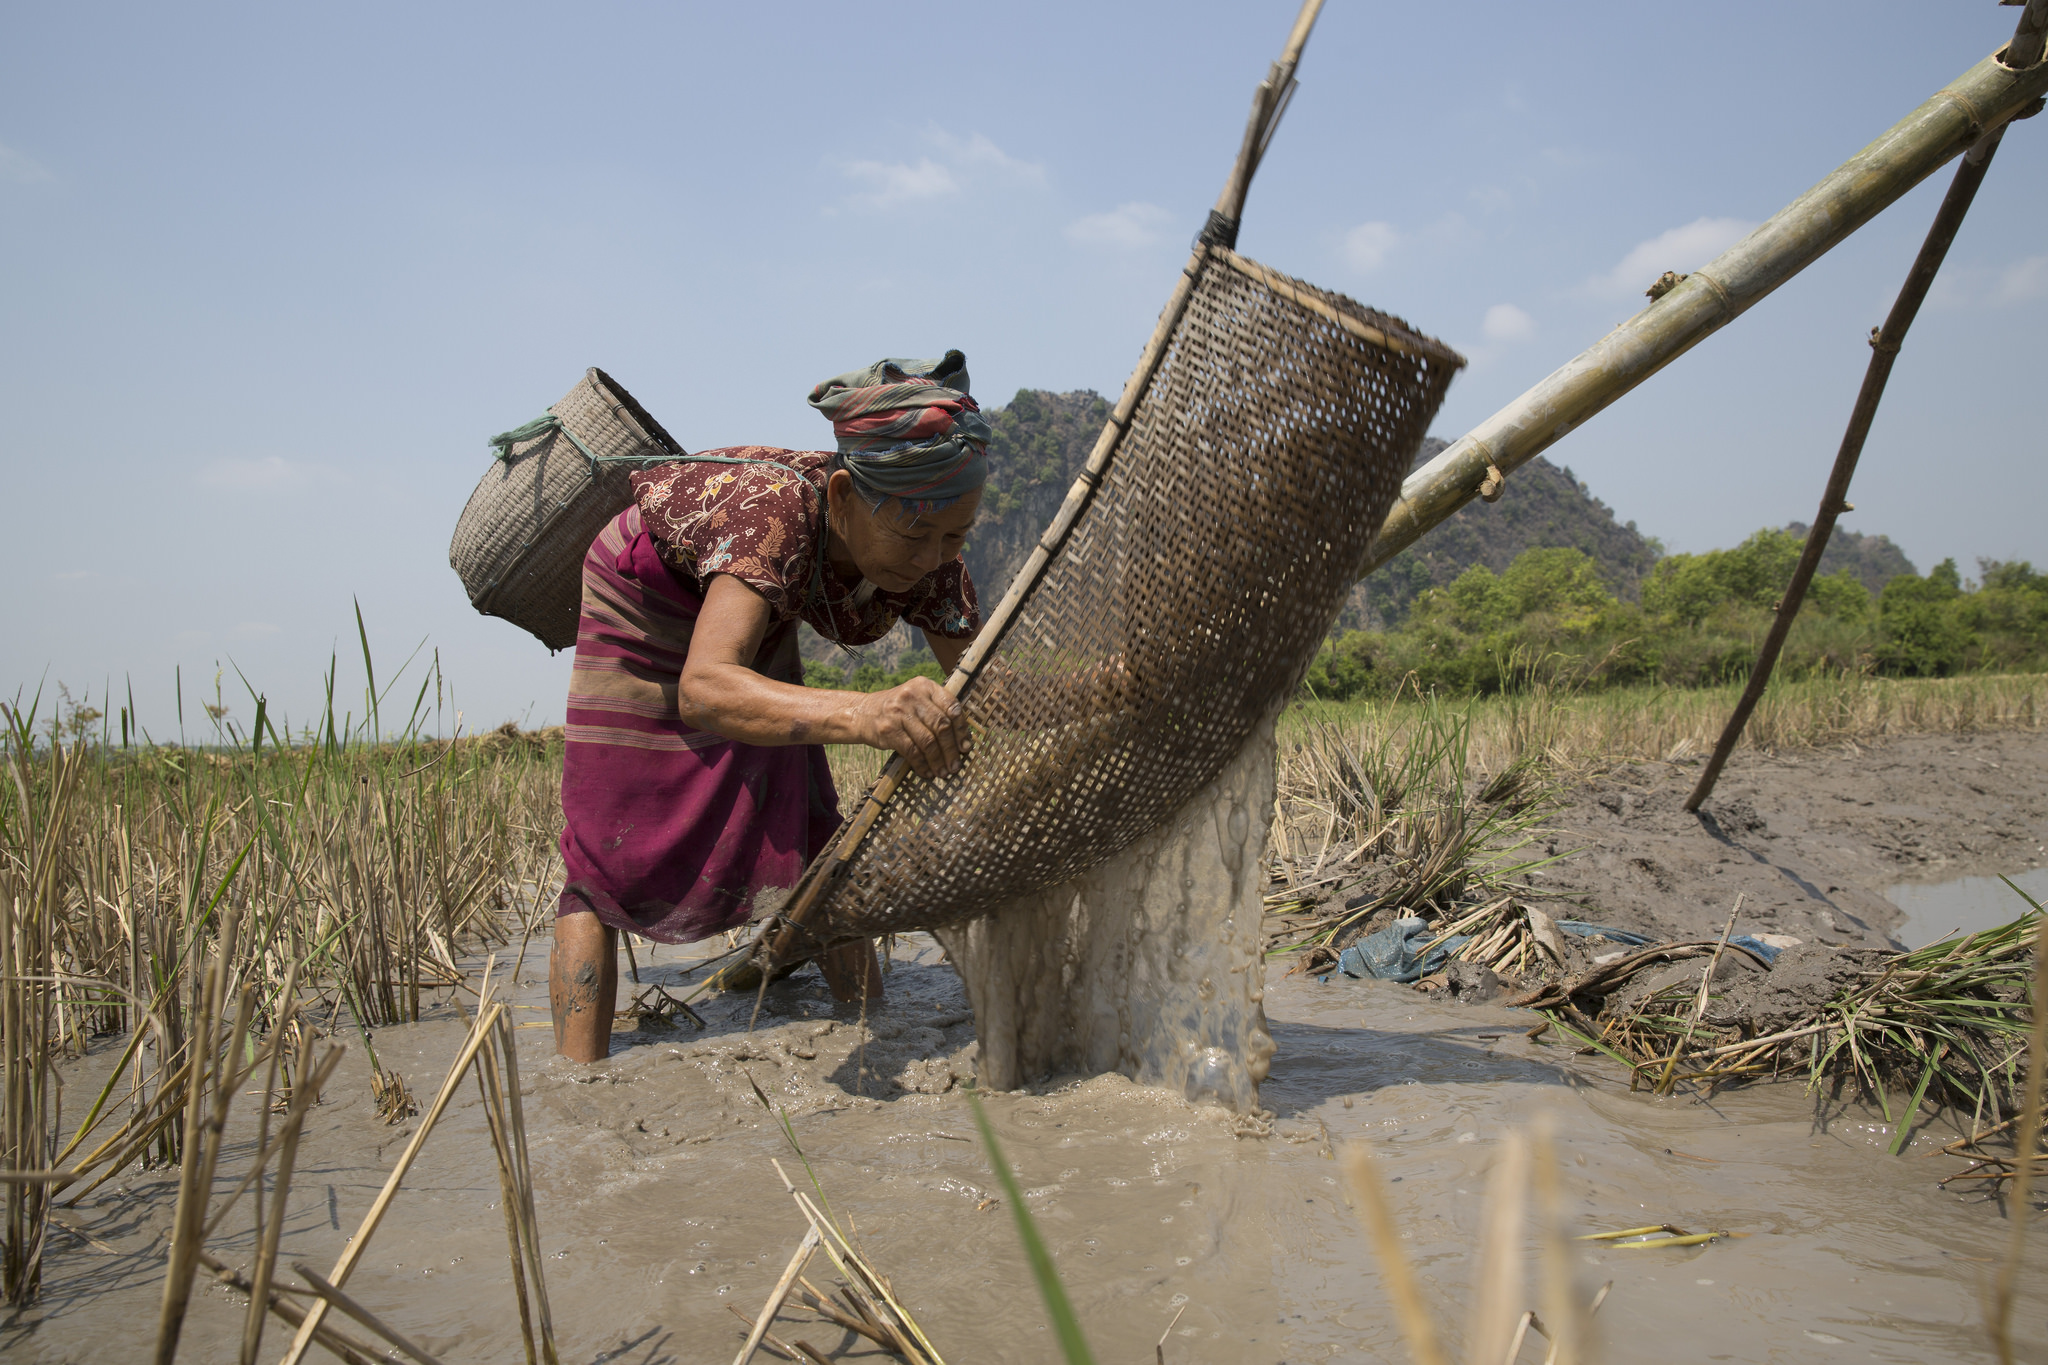  _250_https://www.helpage.org/silo/images/older-woman-working-in-myanmar-_2048x1365.jpg